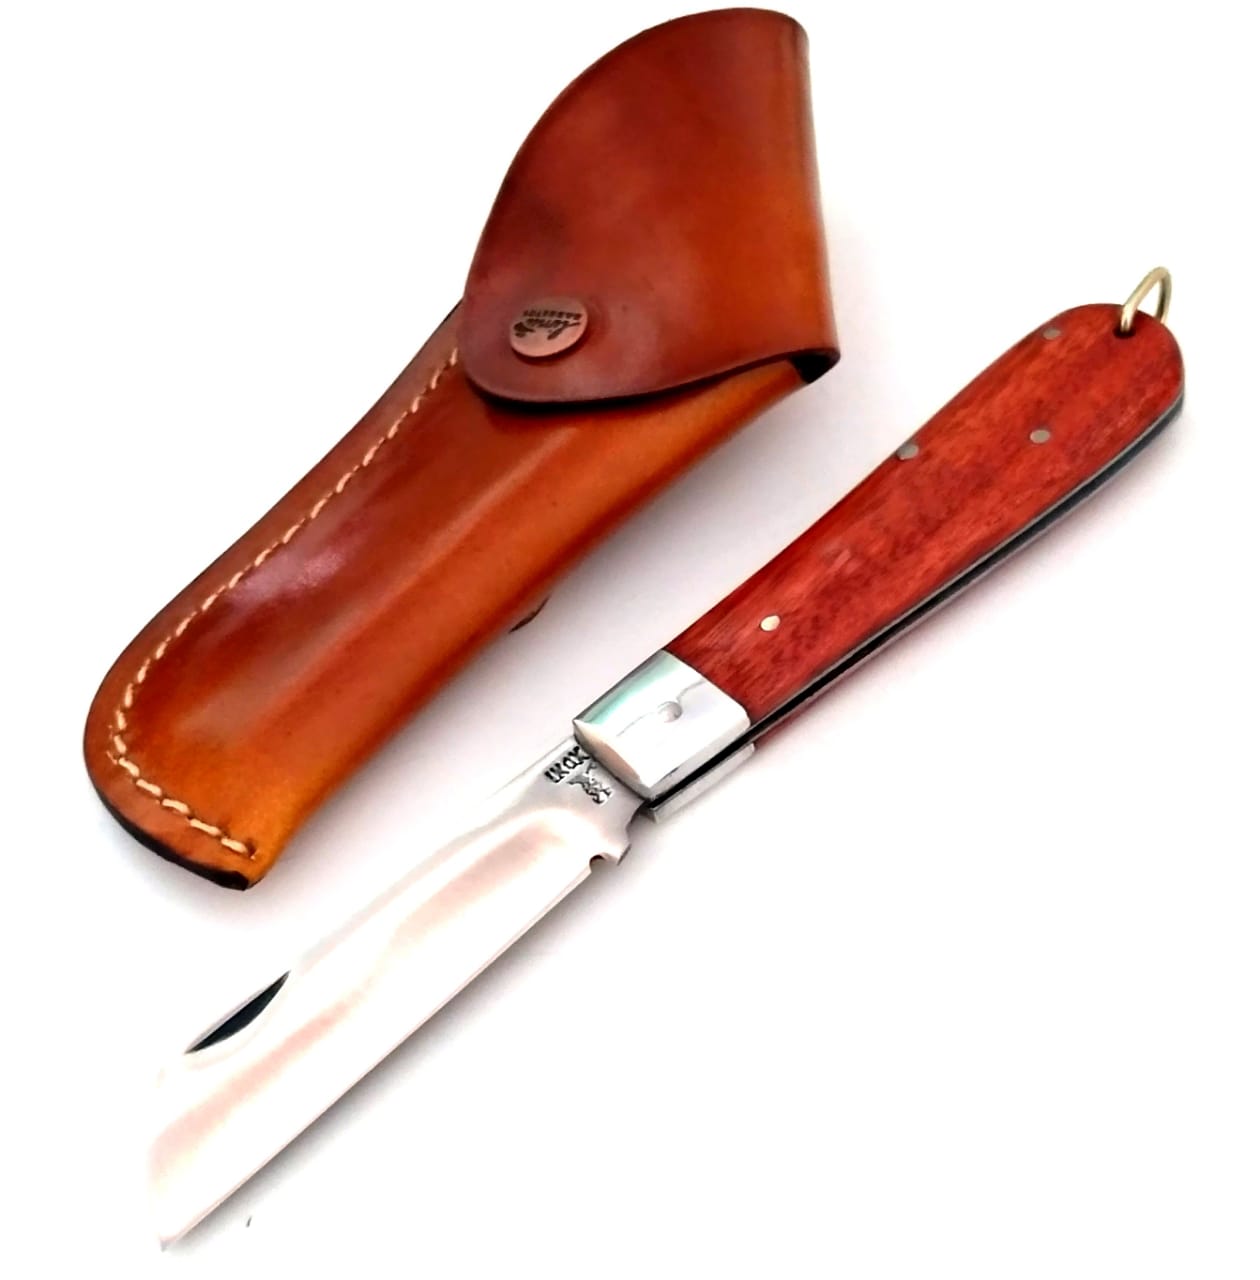 Canivete artesanal em aço inox cabo cabreúva